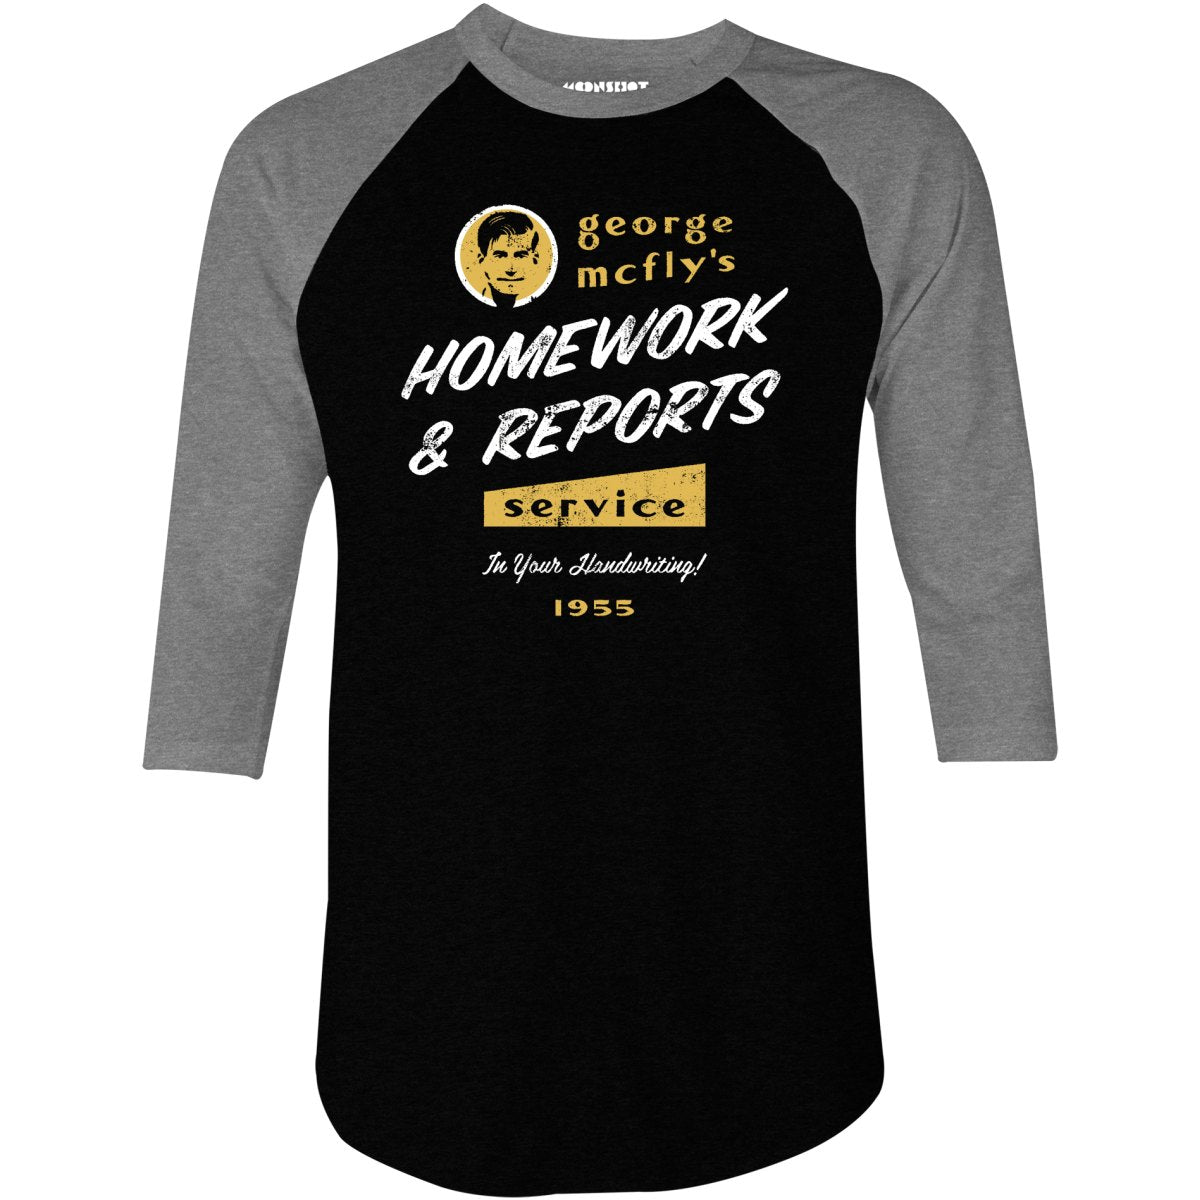 George McFly's Homework & Reports Service - 3/4 Sleeve Raglan T-Shirt